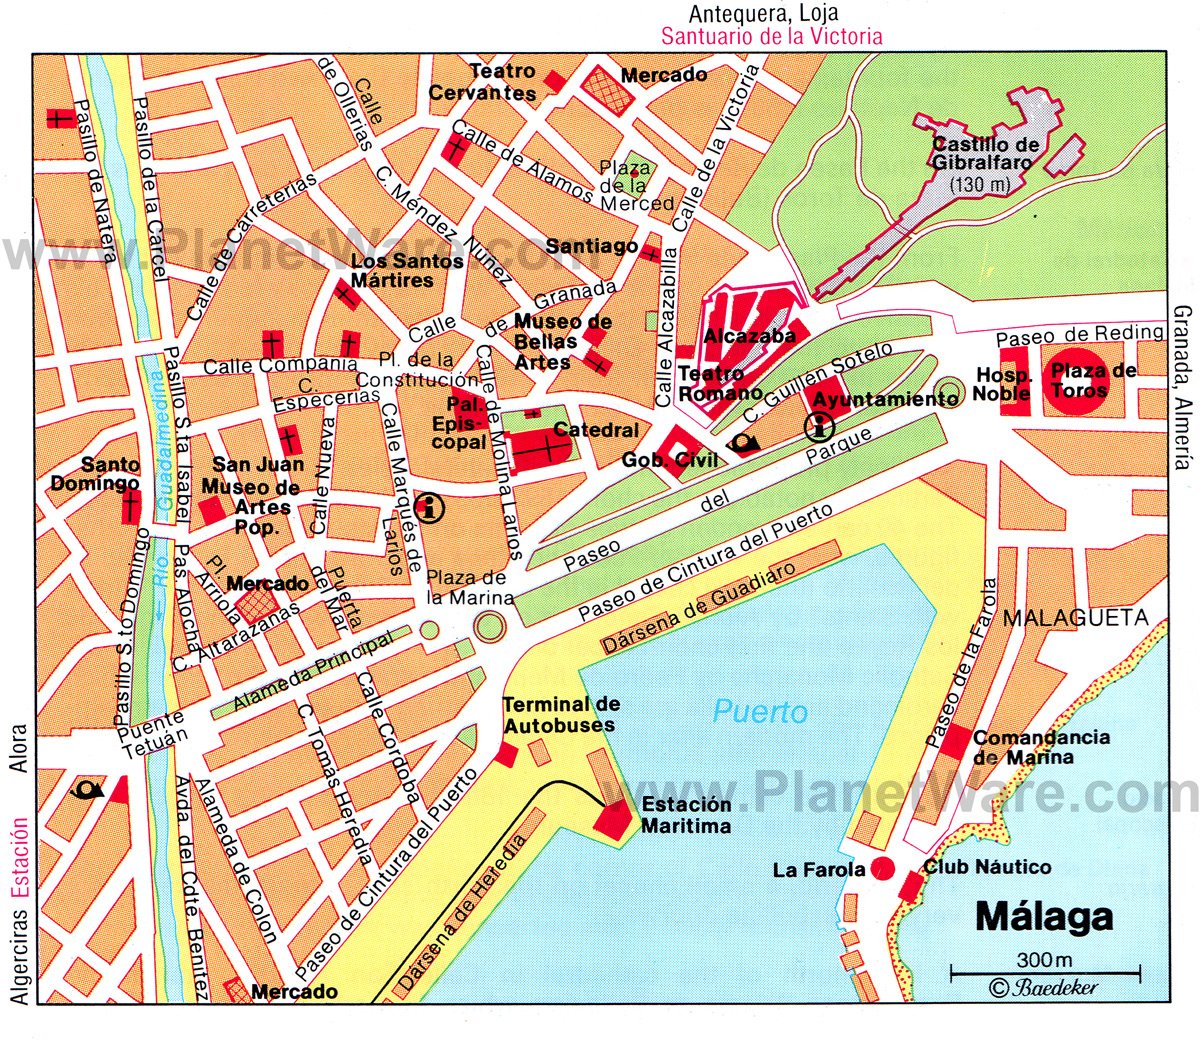 malaga spain map